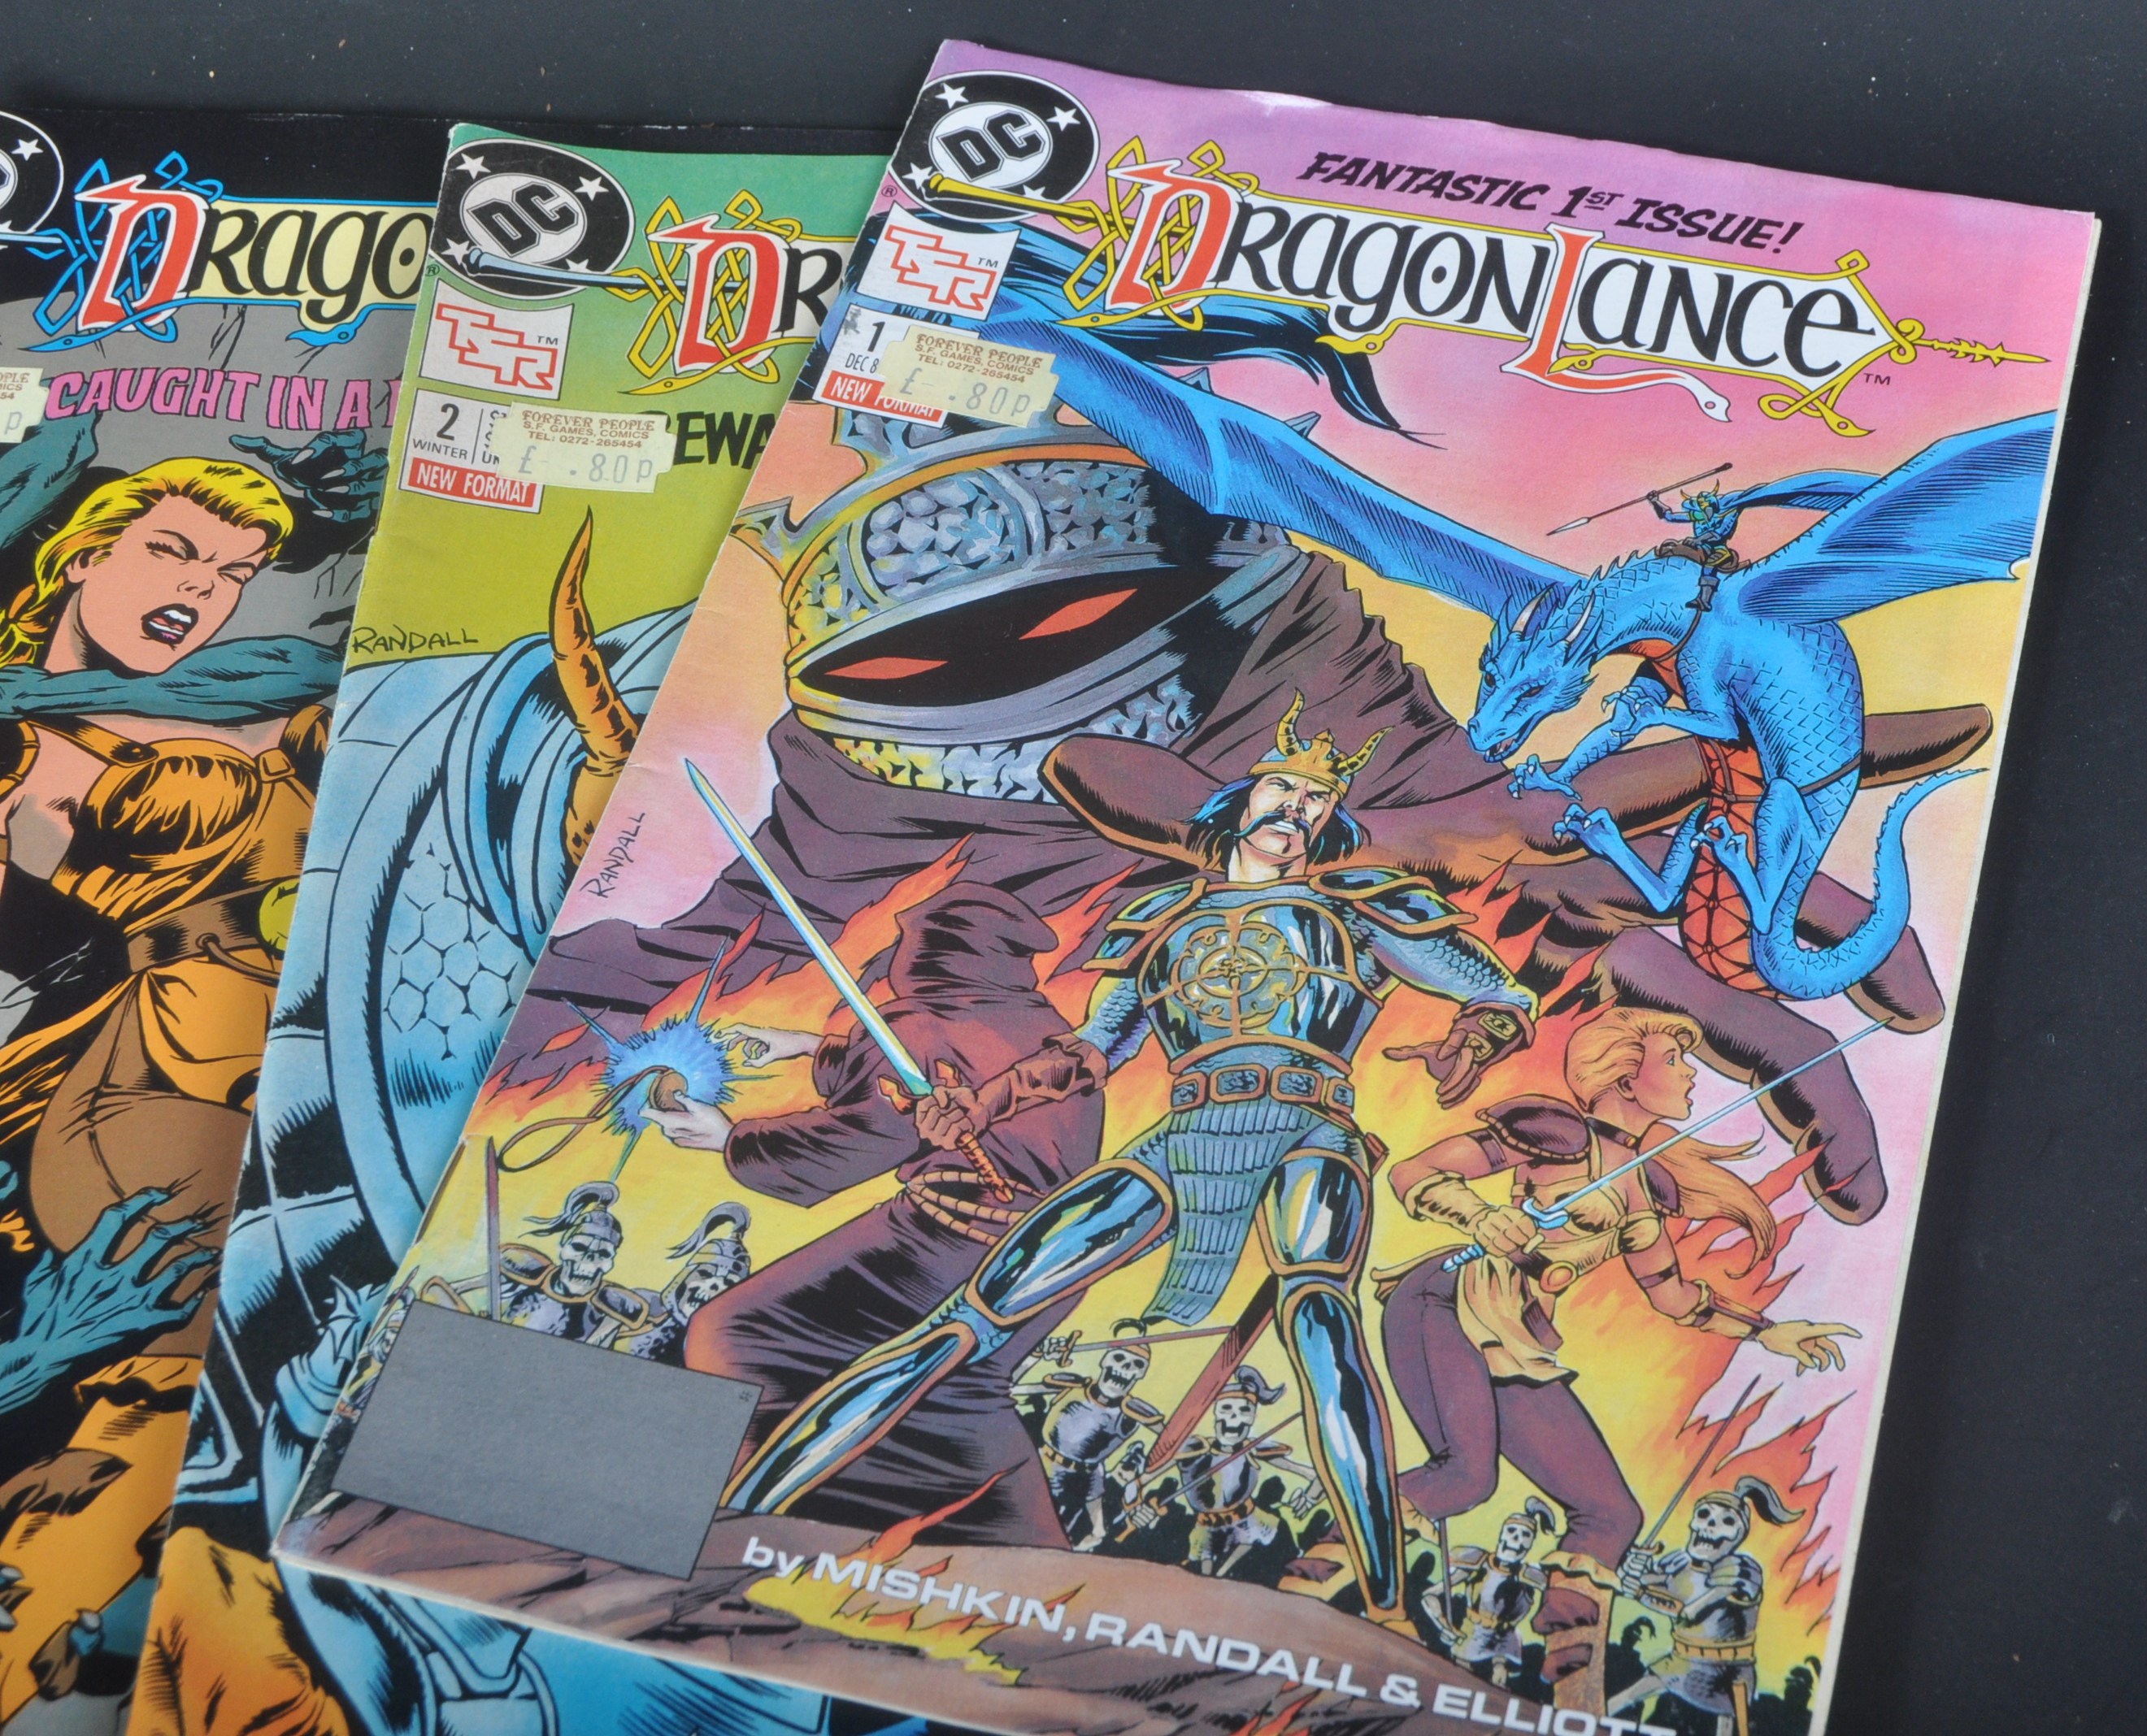 DC COMICS - DRAGON LANCE & TAILGUNNER JO - VINTAGE COMIC BOOKS - Image 2 of 6